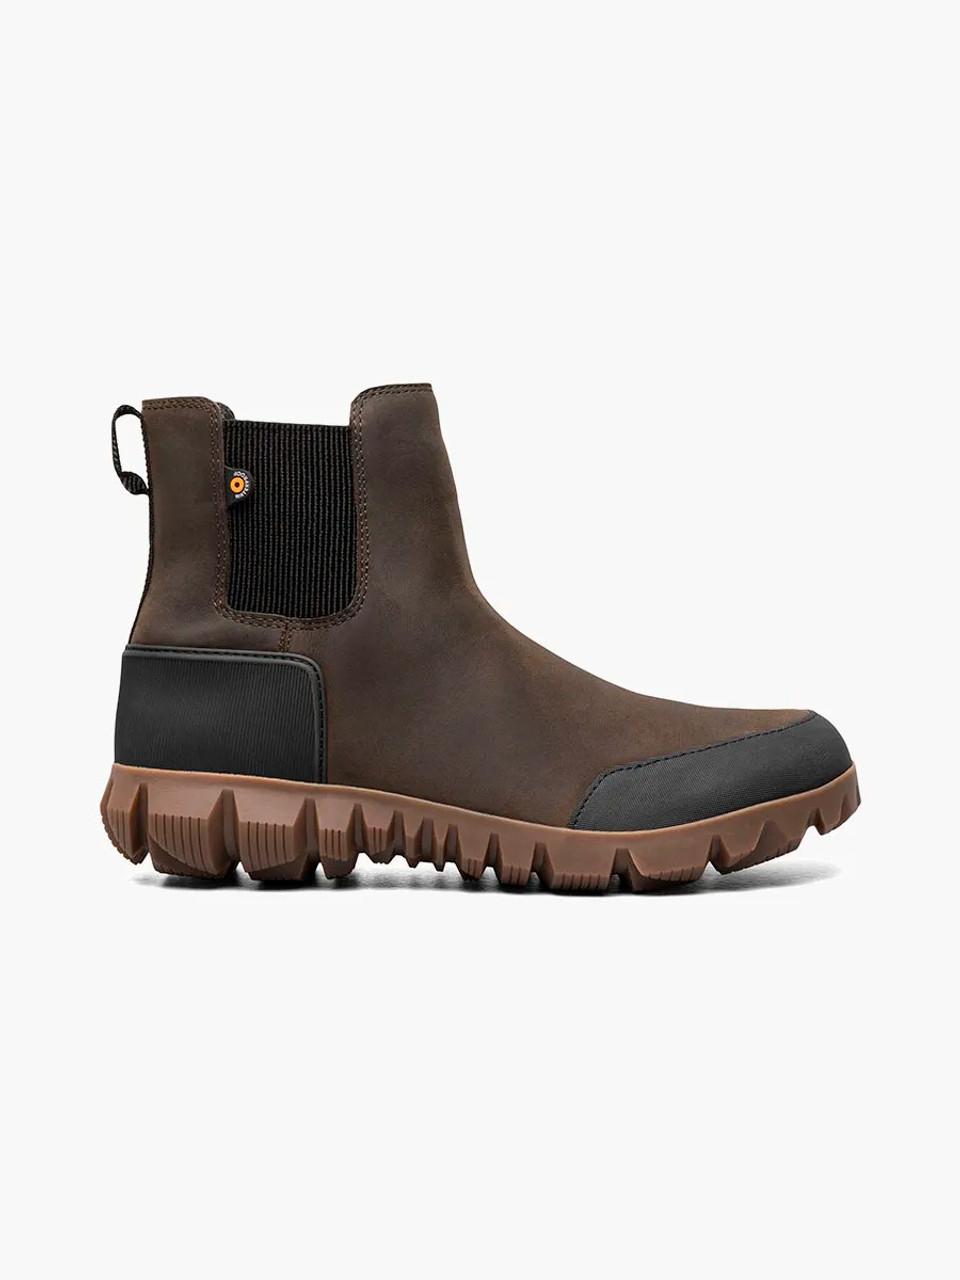 Bogs Arcata Urban Leather Chelsea Men's Winter Boots